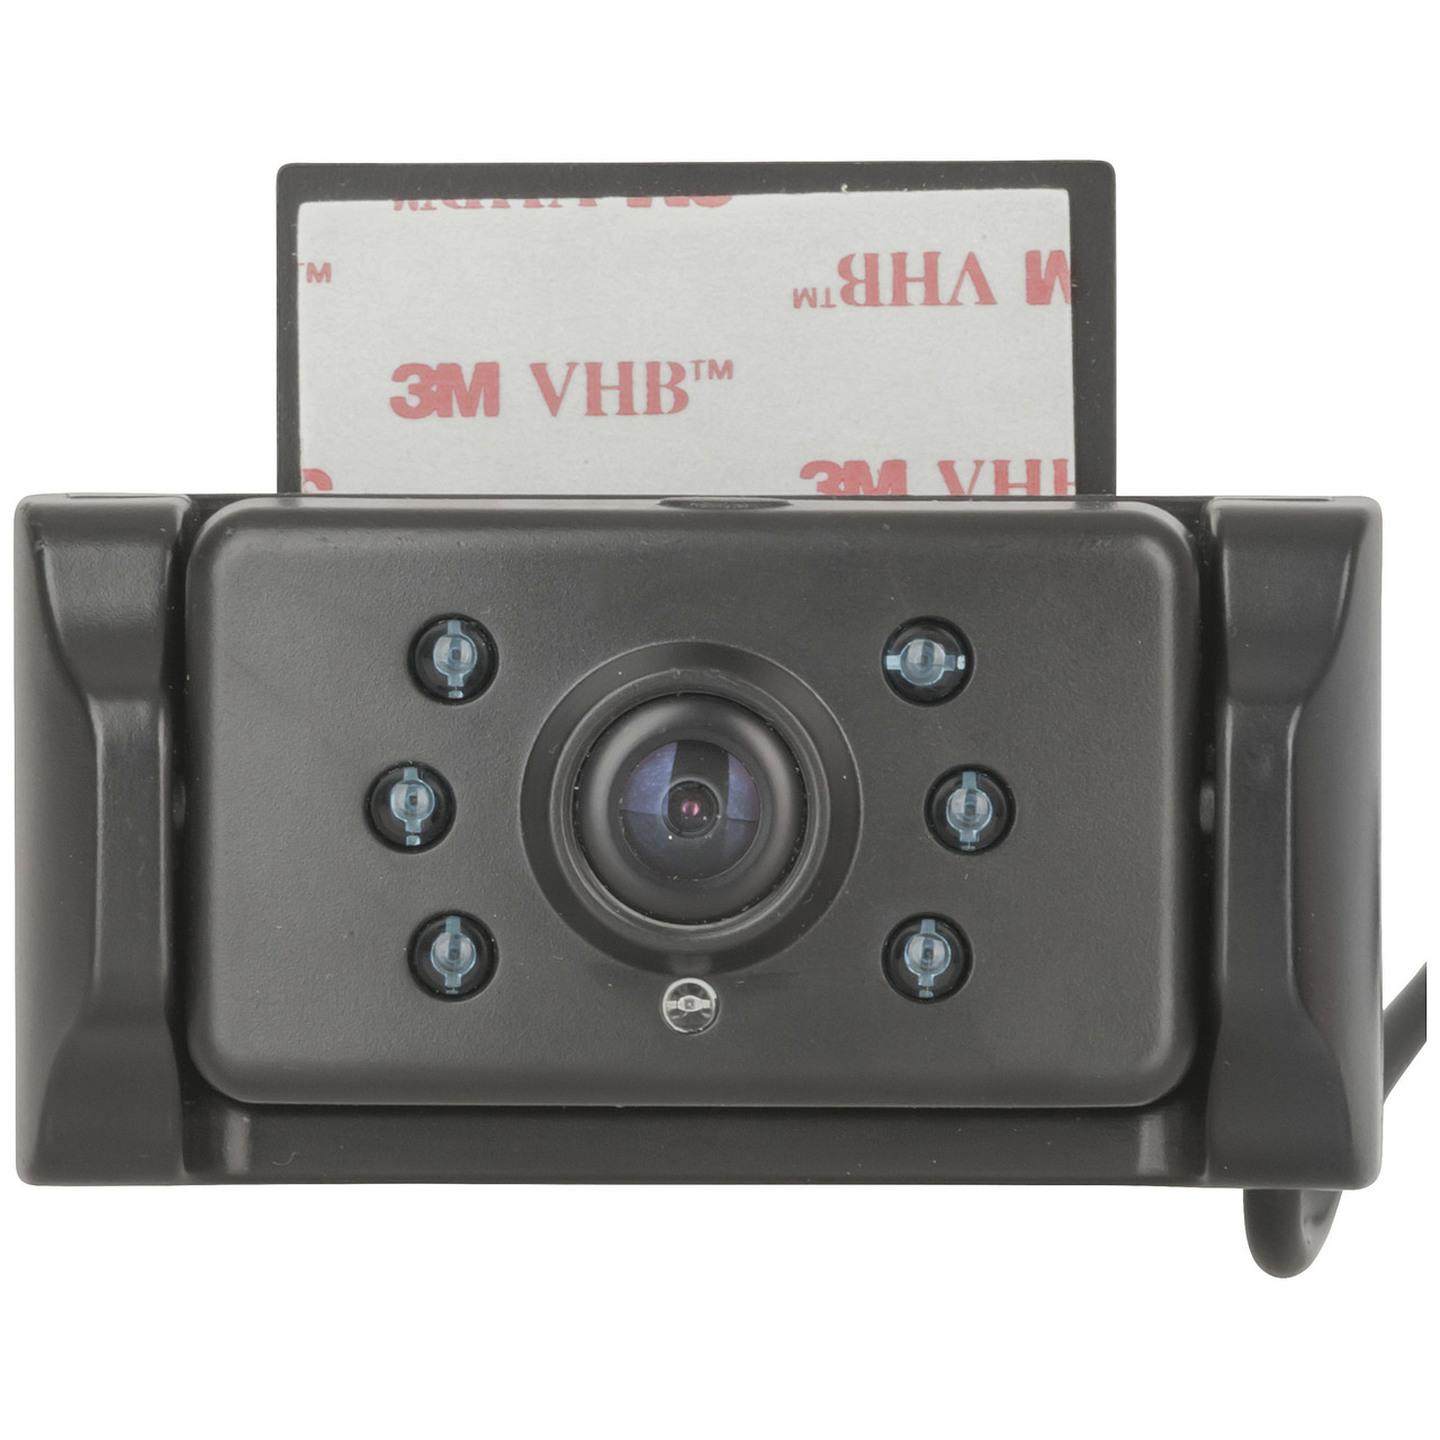 2.4GHz Digital Reversing Camera with Event Recorder